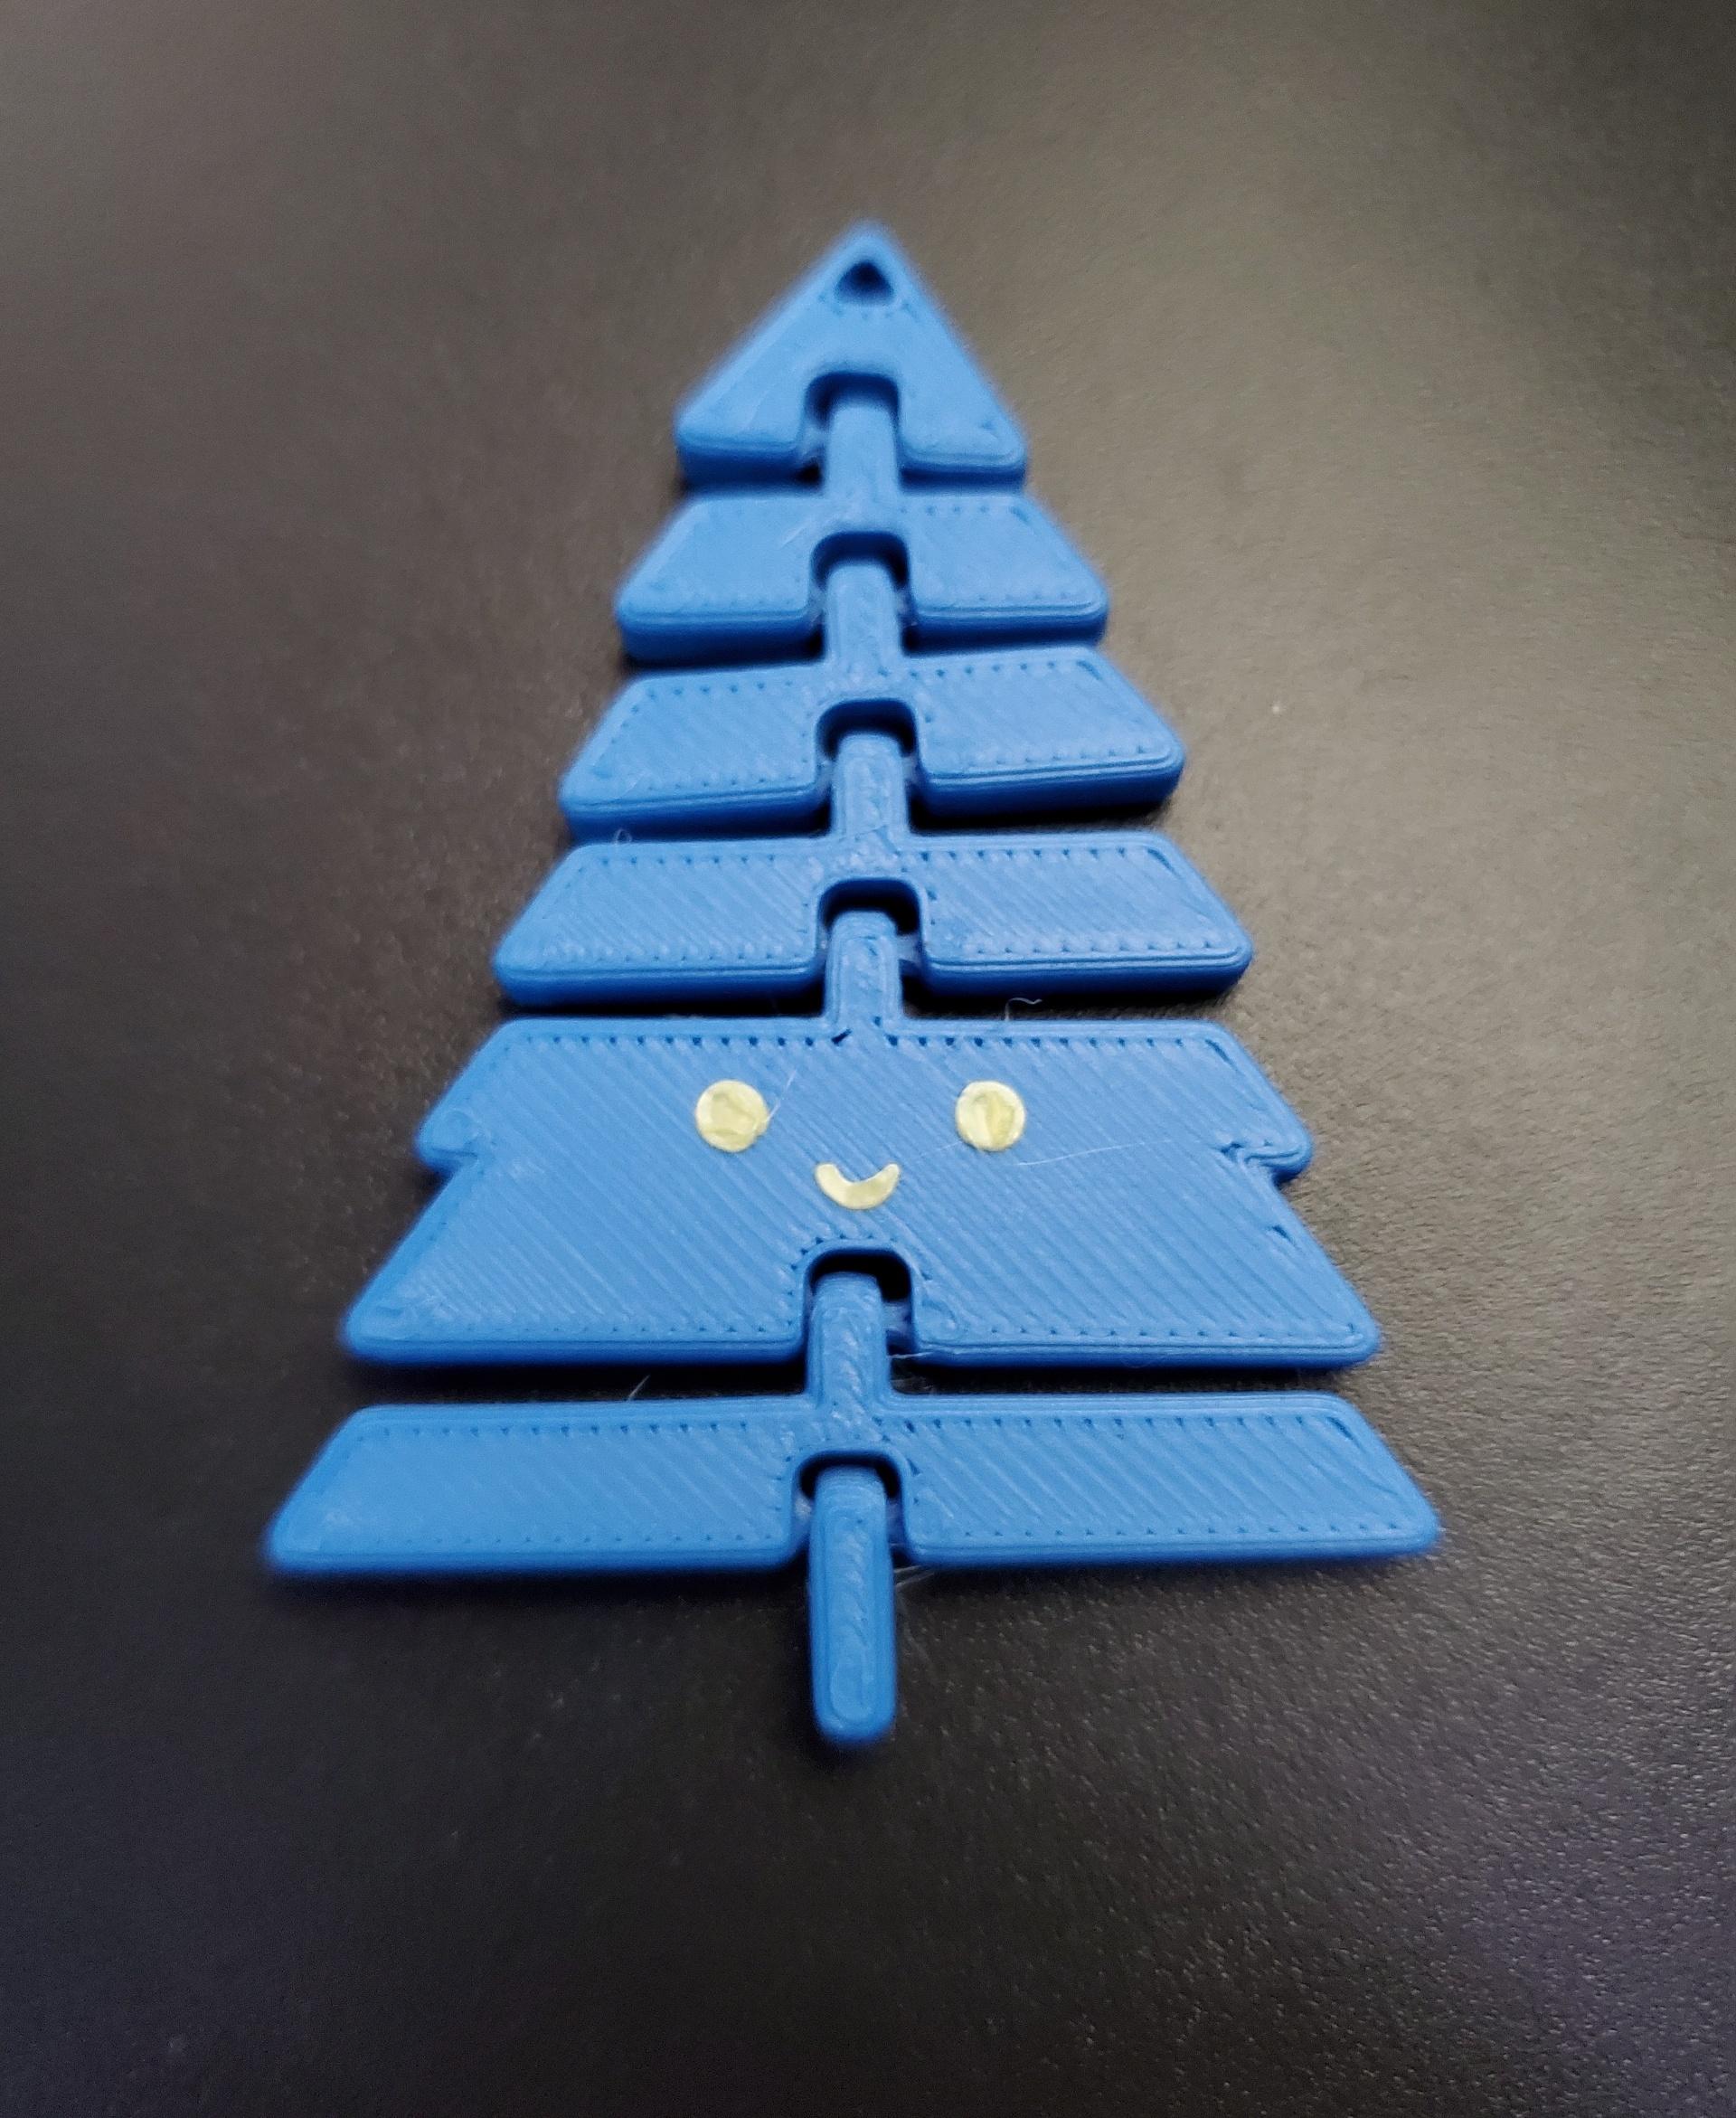 Articulated Kawaii Christmas Tree Keychain - Print in place fidget toy - 3mf - polyterra sapphire blue - 3d model